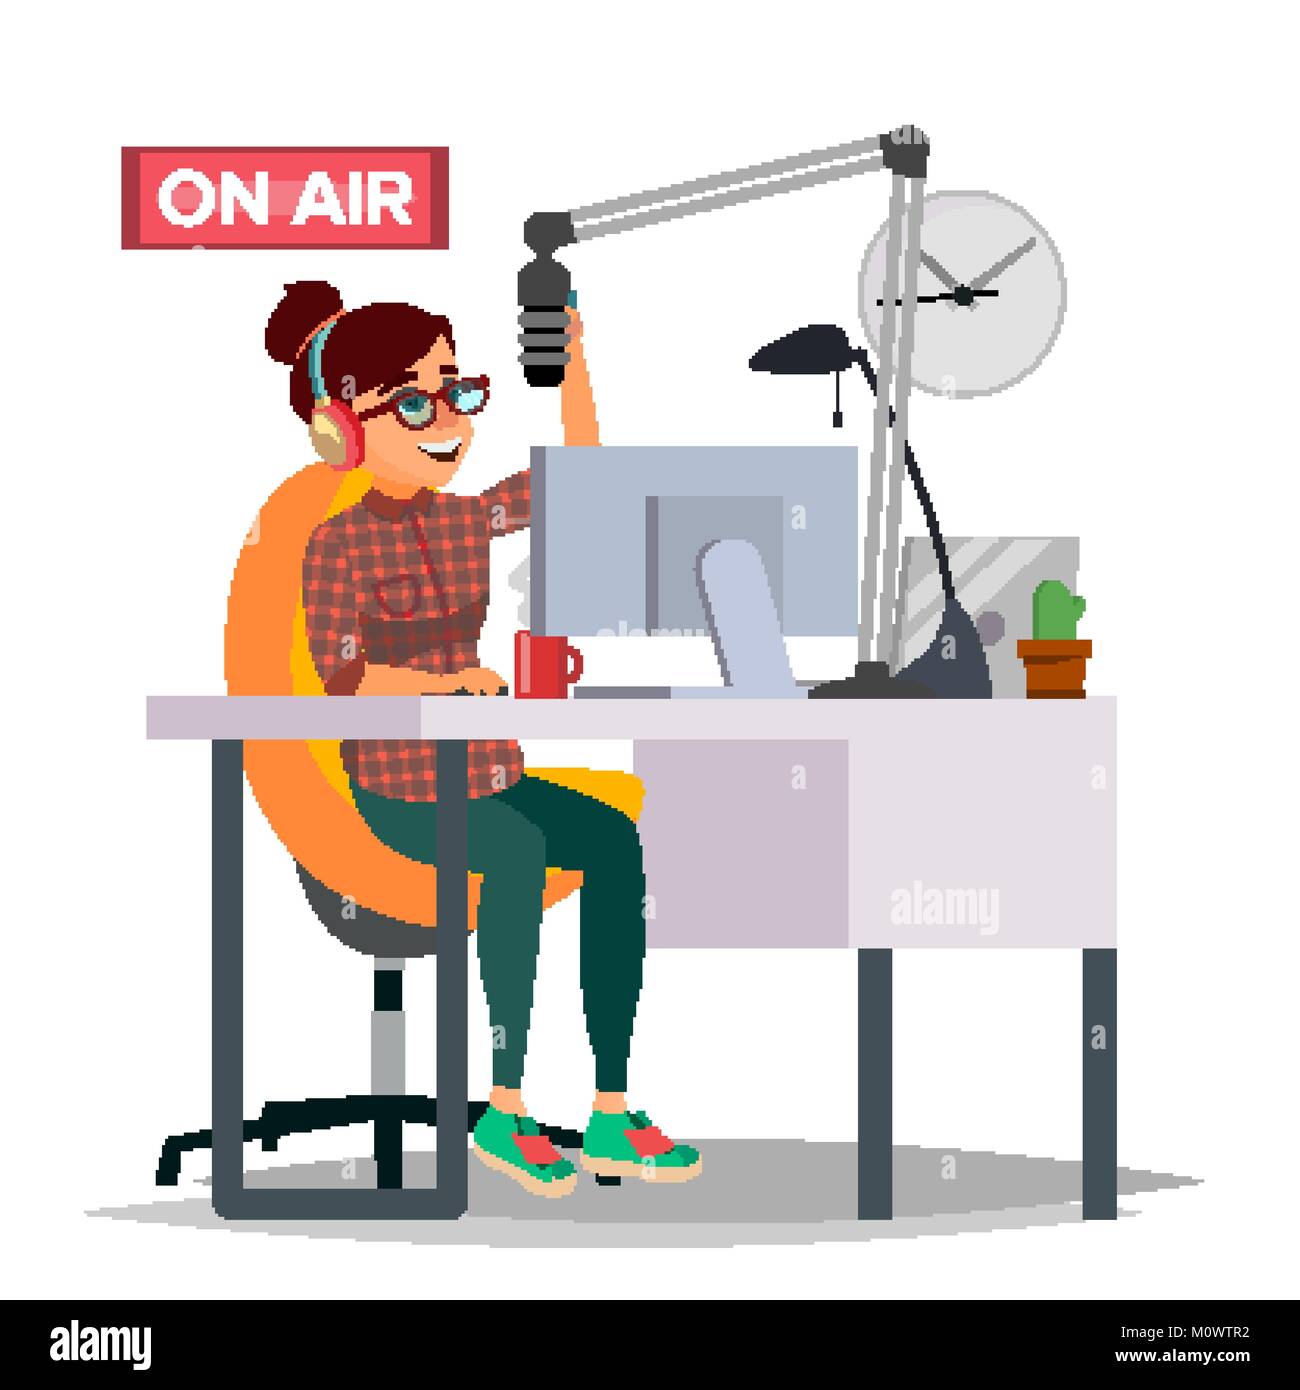 Radio DJ Woman Vector. Broadcasting. Modern Radio Station. Female Speak  Into The Microphone. On Air. Broadcasting. Isolated Flat Cartoon  Illustration Stock Vector Image & Art - Alamy